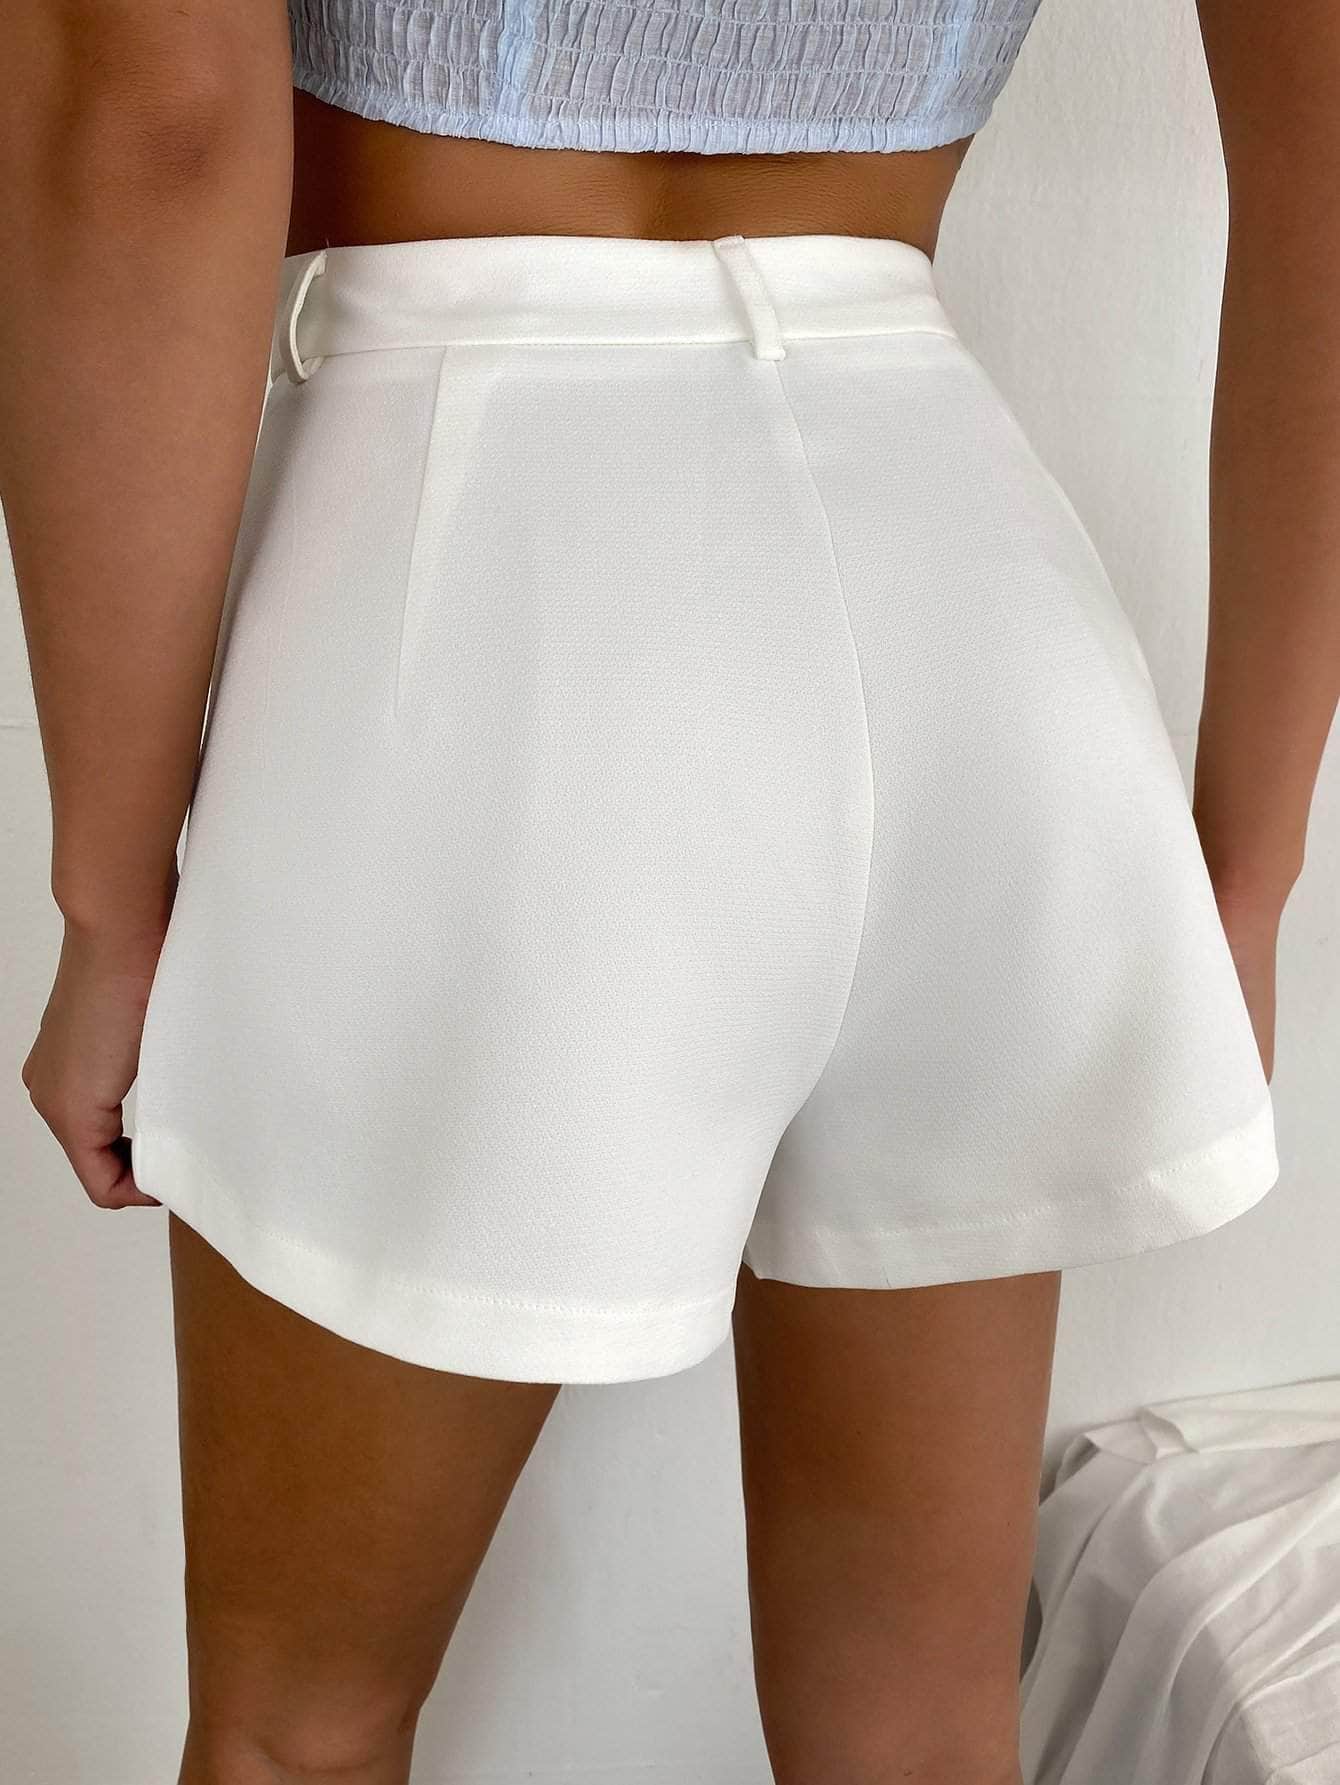 Blanco / S Shorts con bolsillo oblicuo de pierna ancha unicolor